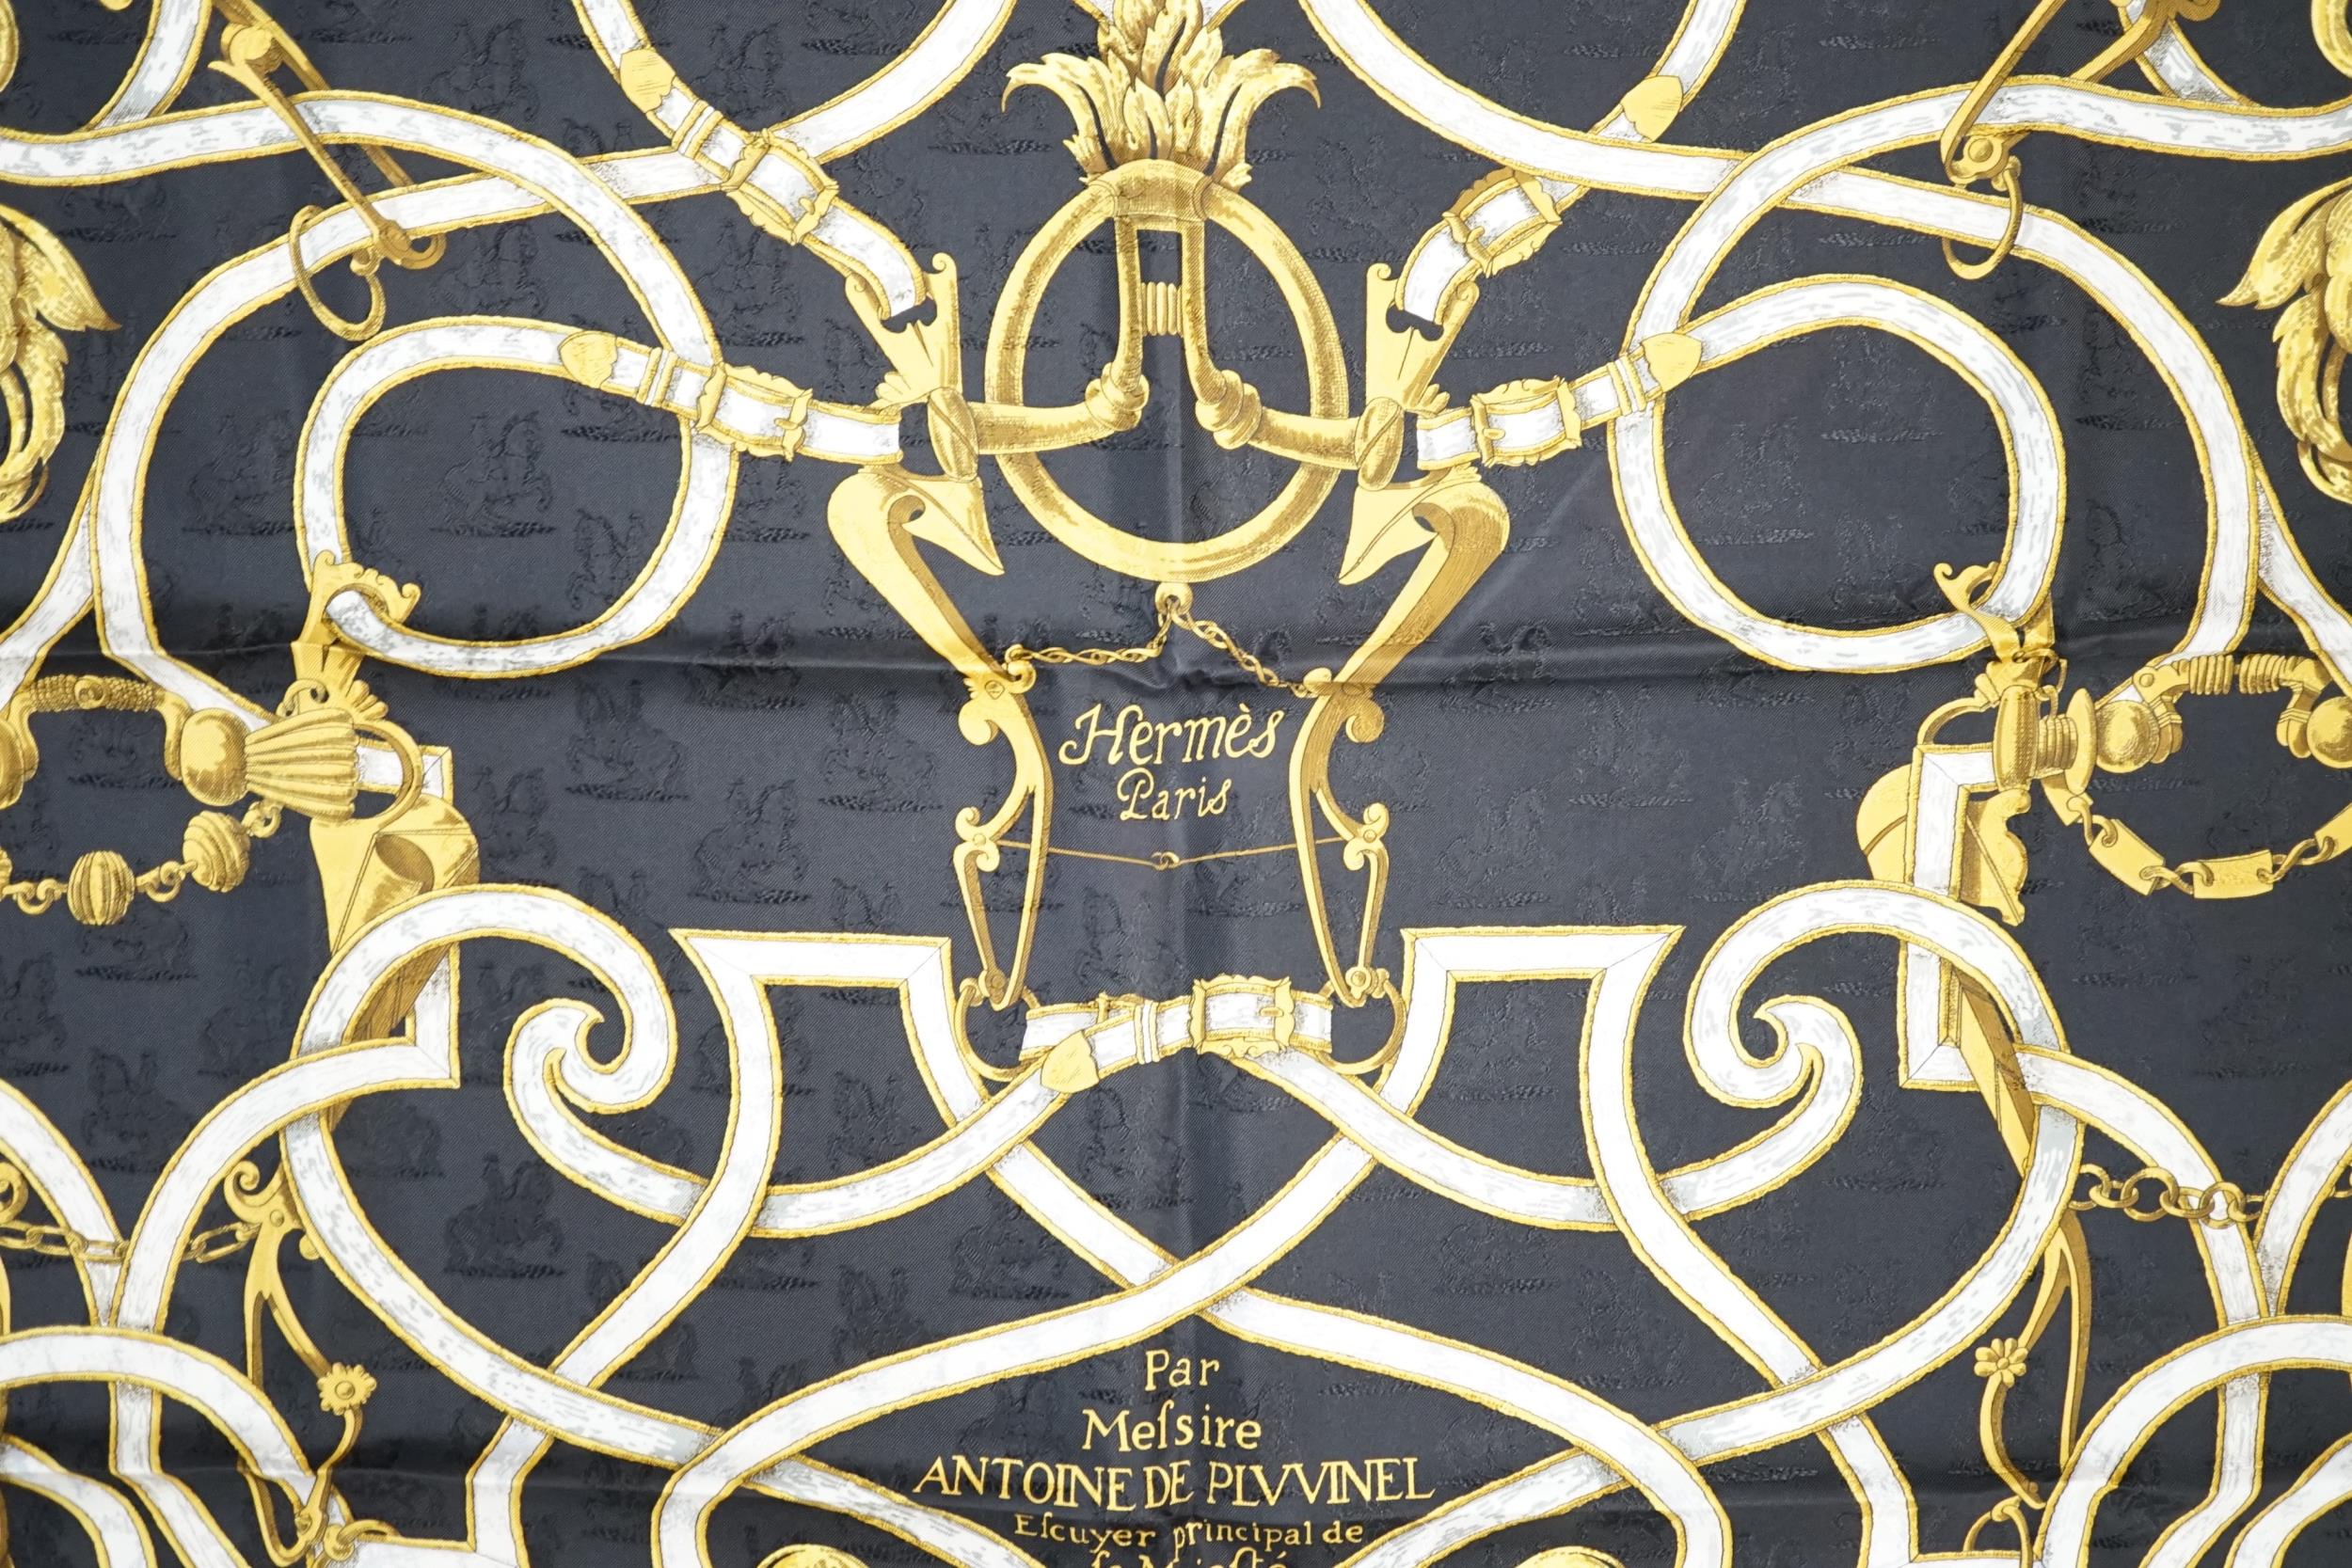 H.d’Origny for Hermes, an Antoine De Pluvinel scarf - Image 3 of 4